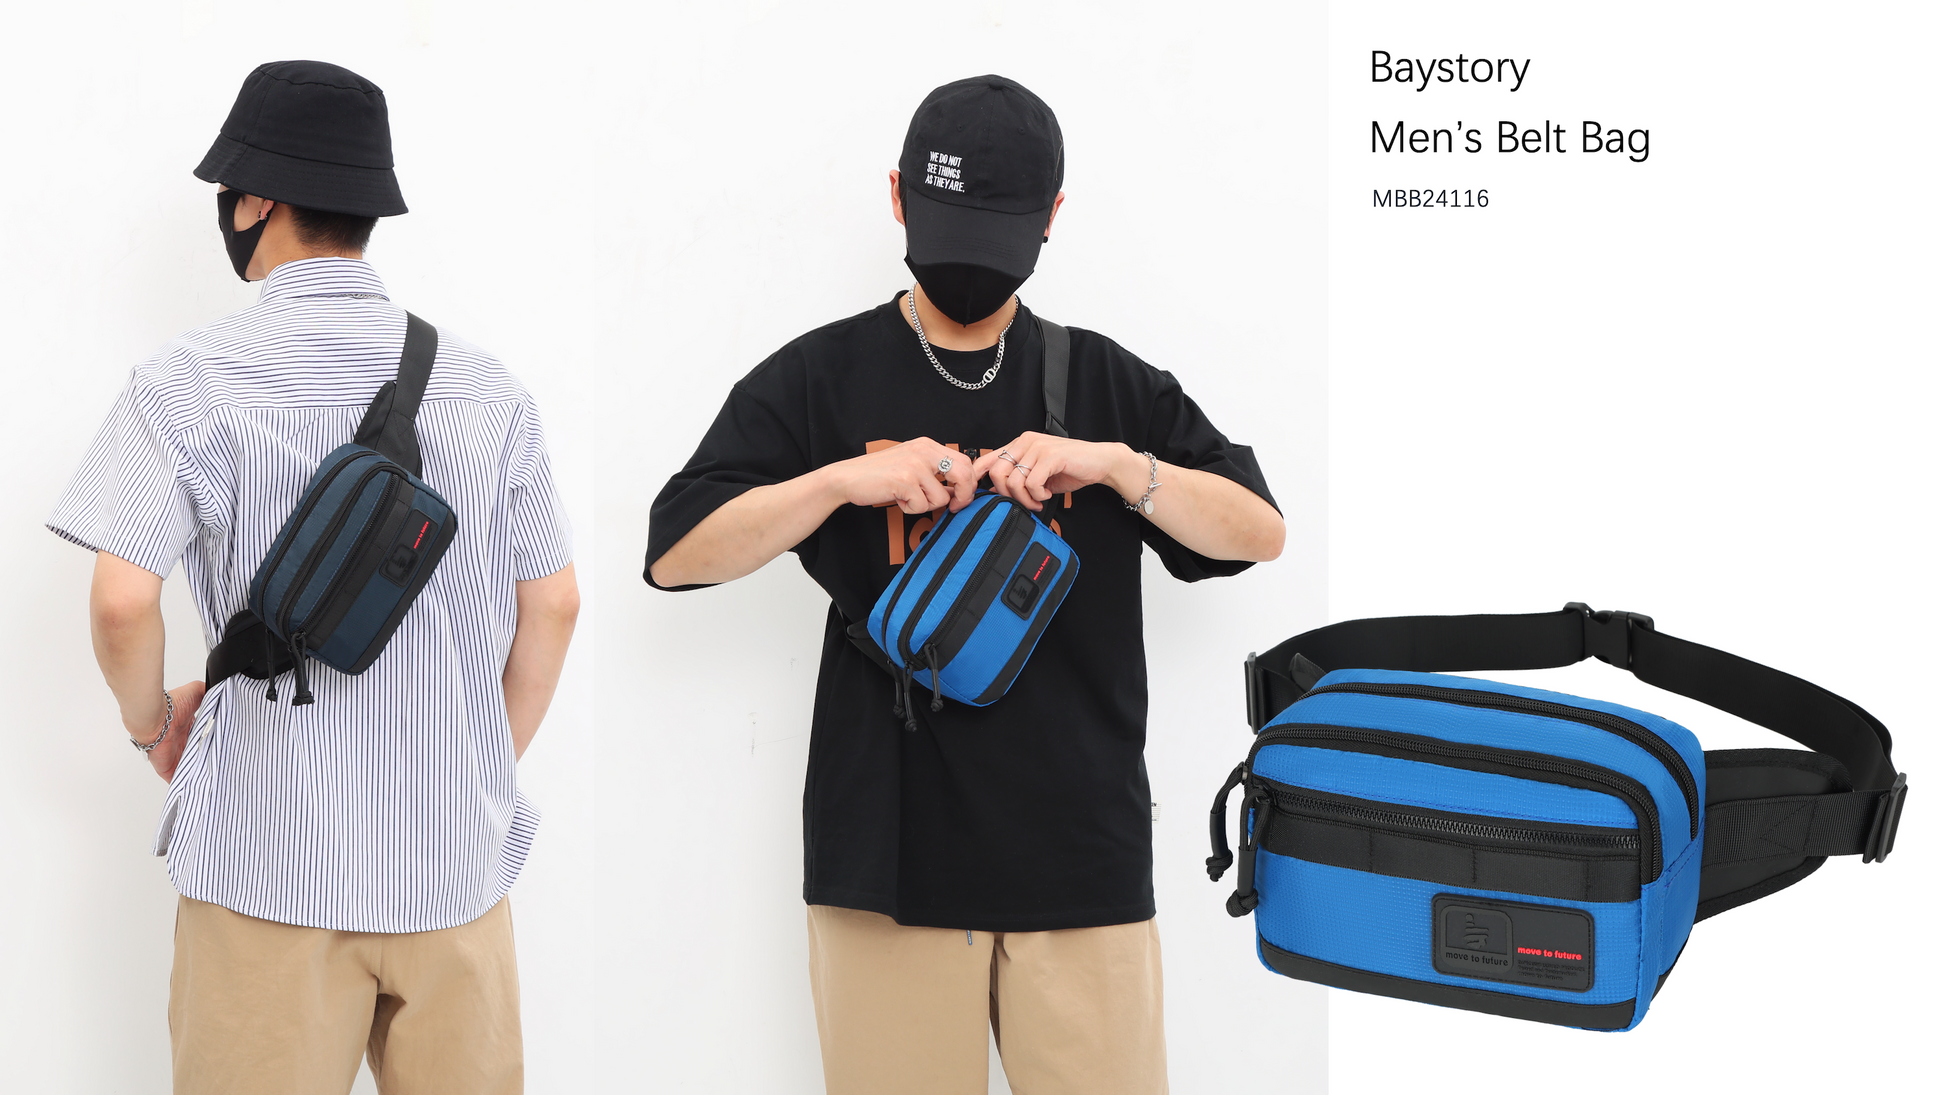 Baystory Men’s Belt Bag MBB24116 - Baystory